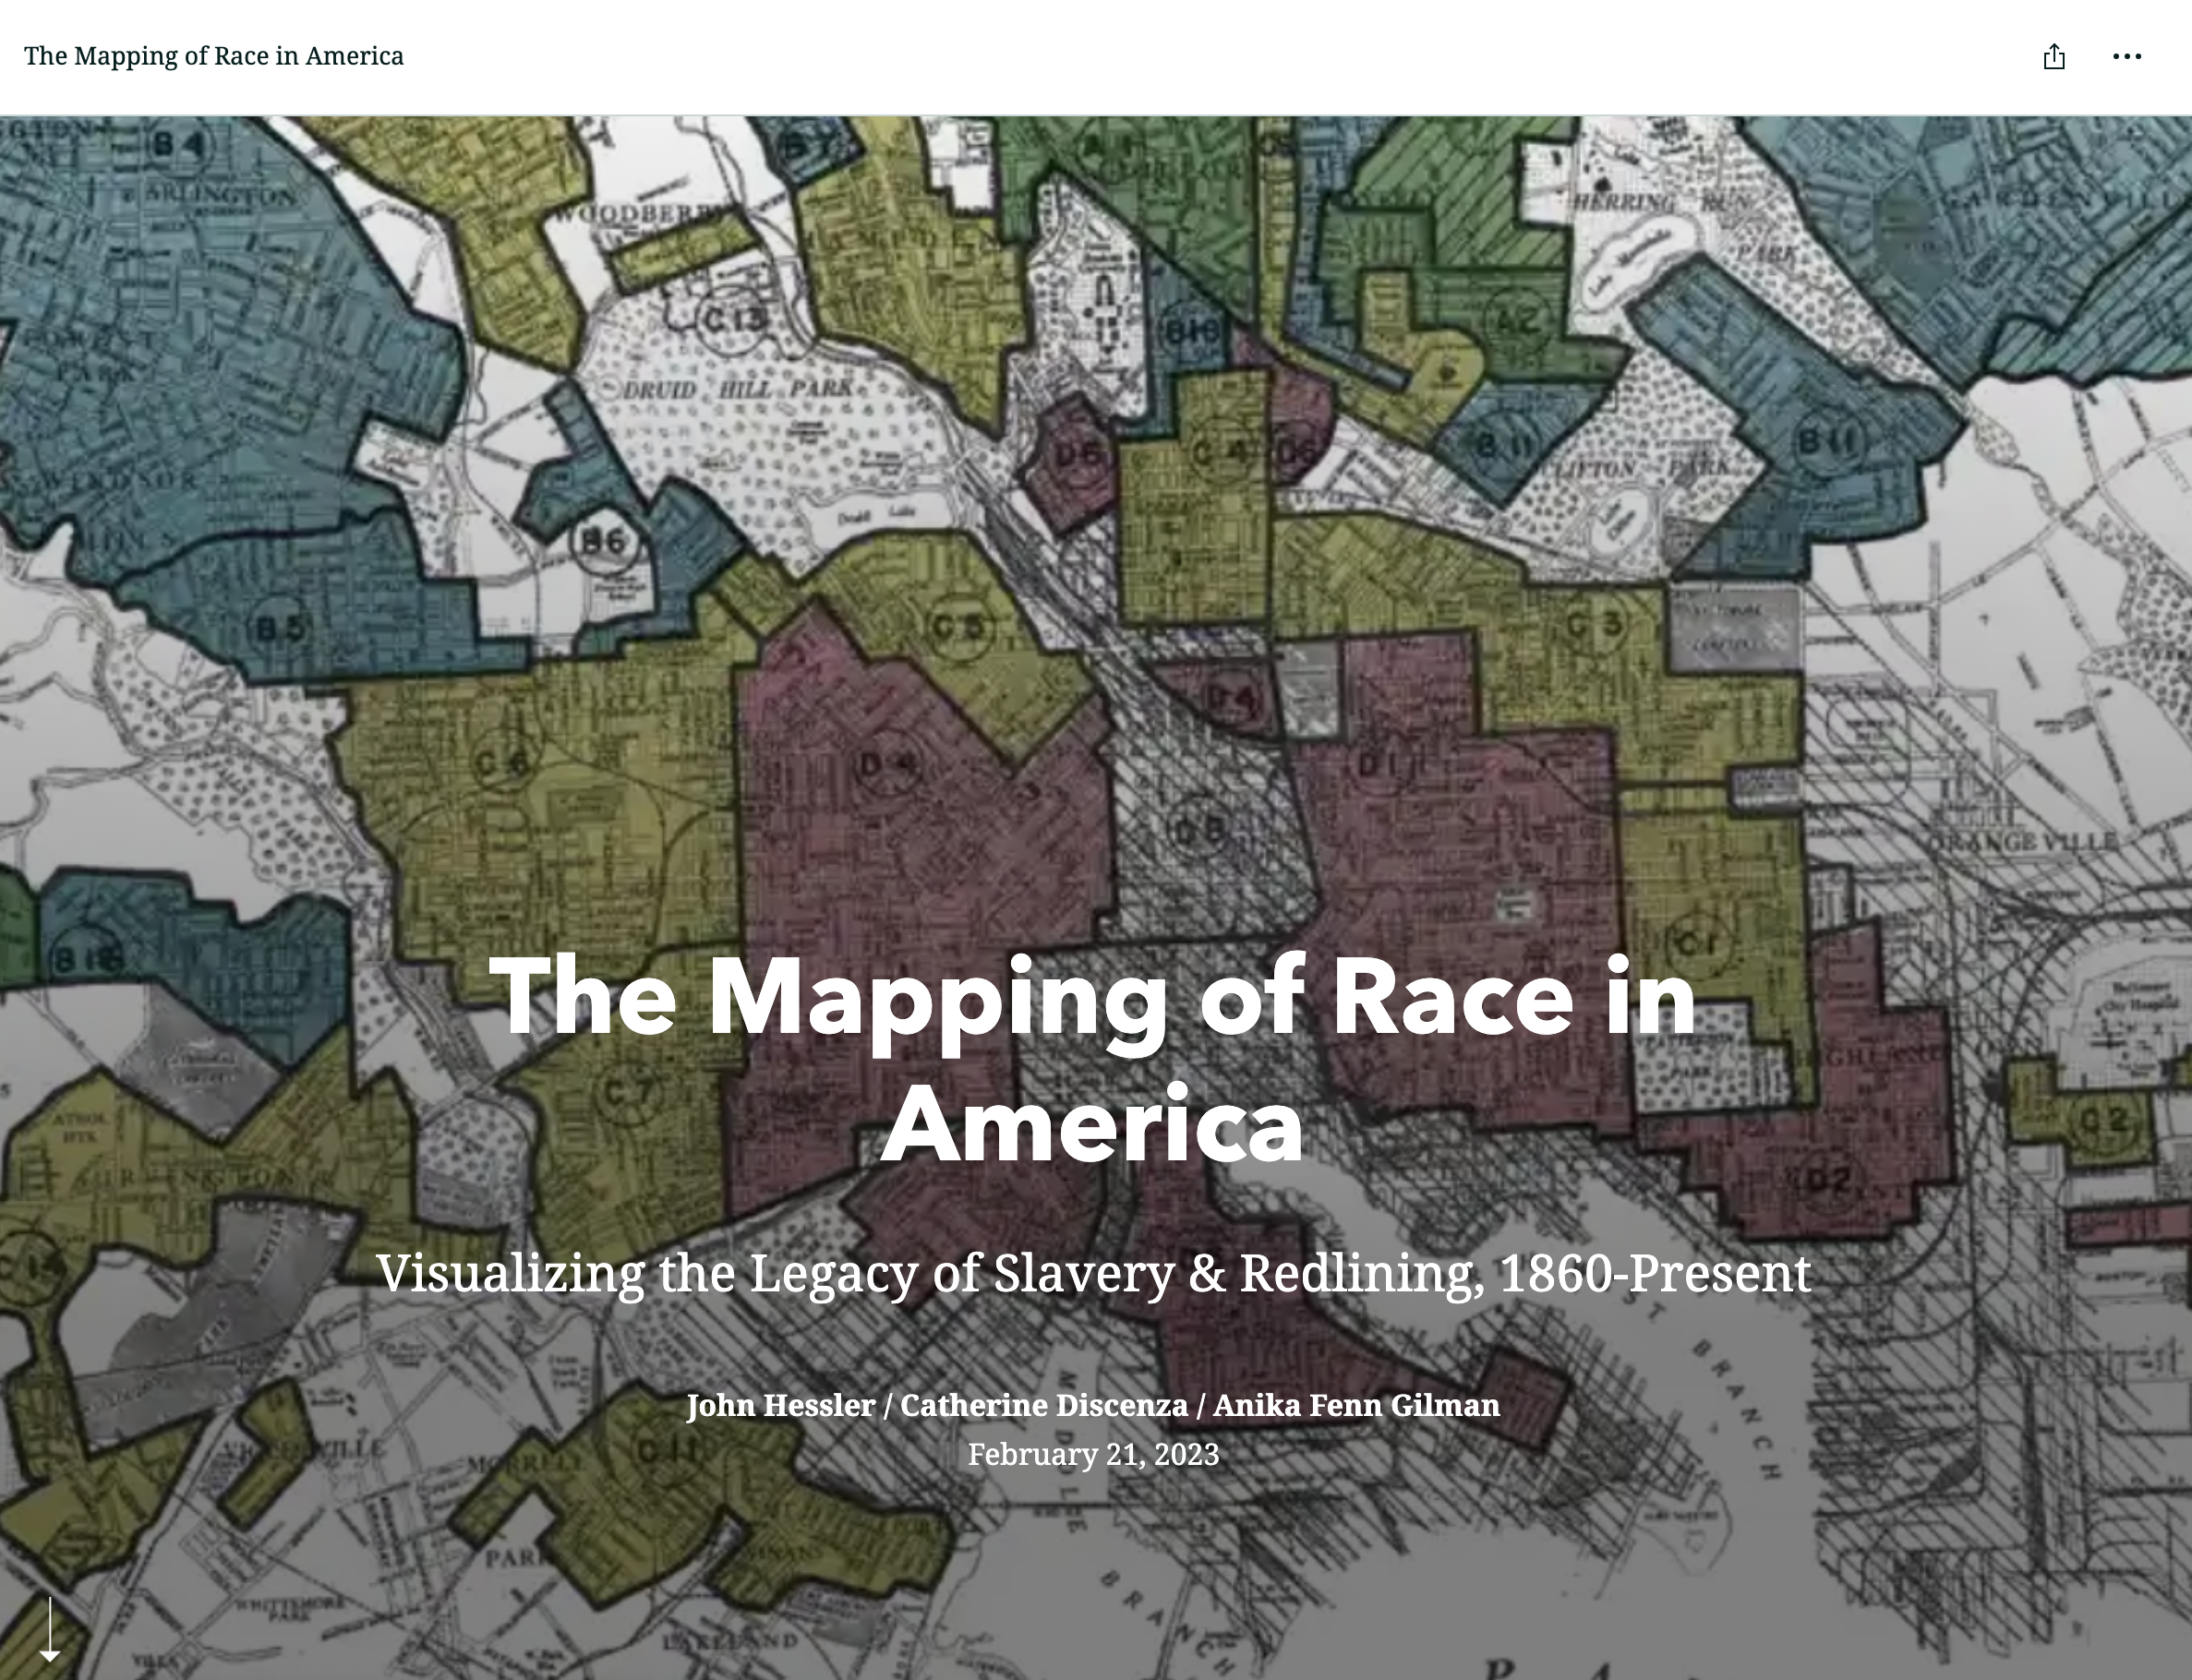 Figure 1.8 - The Mapping of Race in America (Hessler et al 2023)